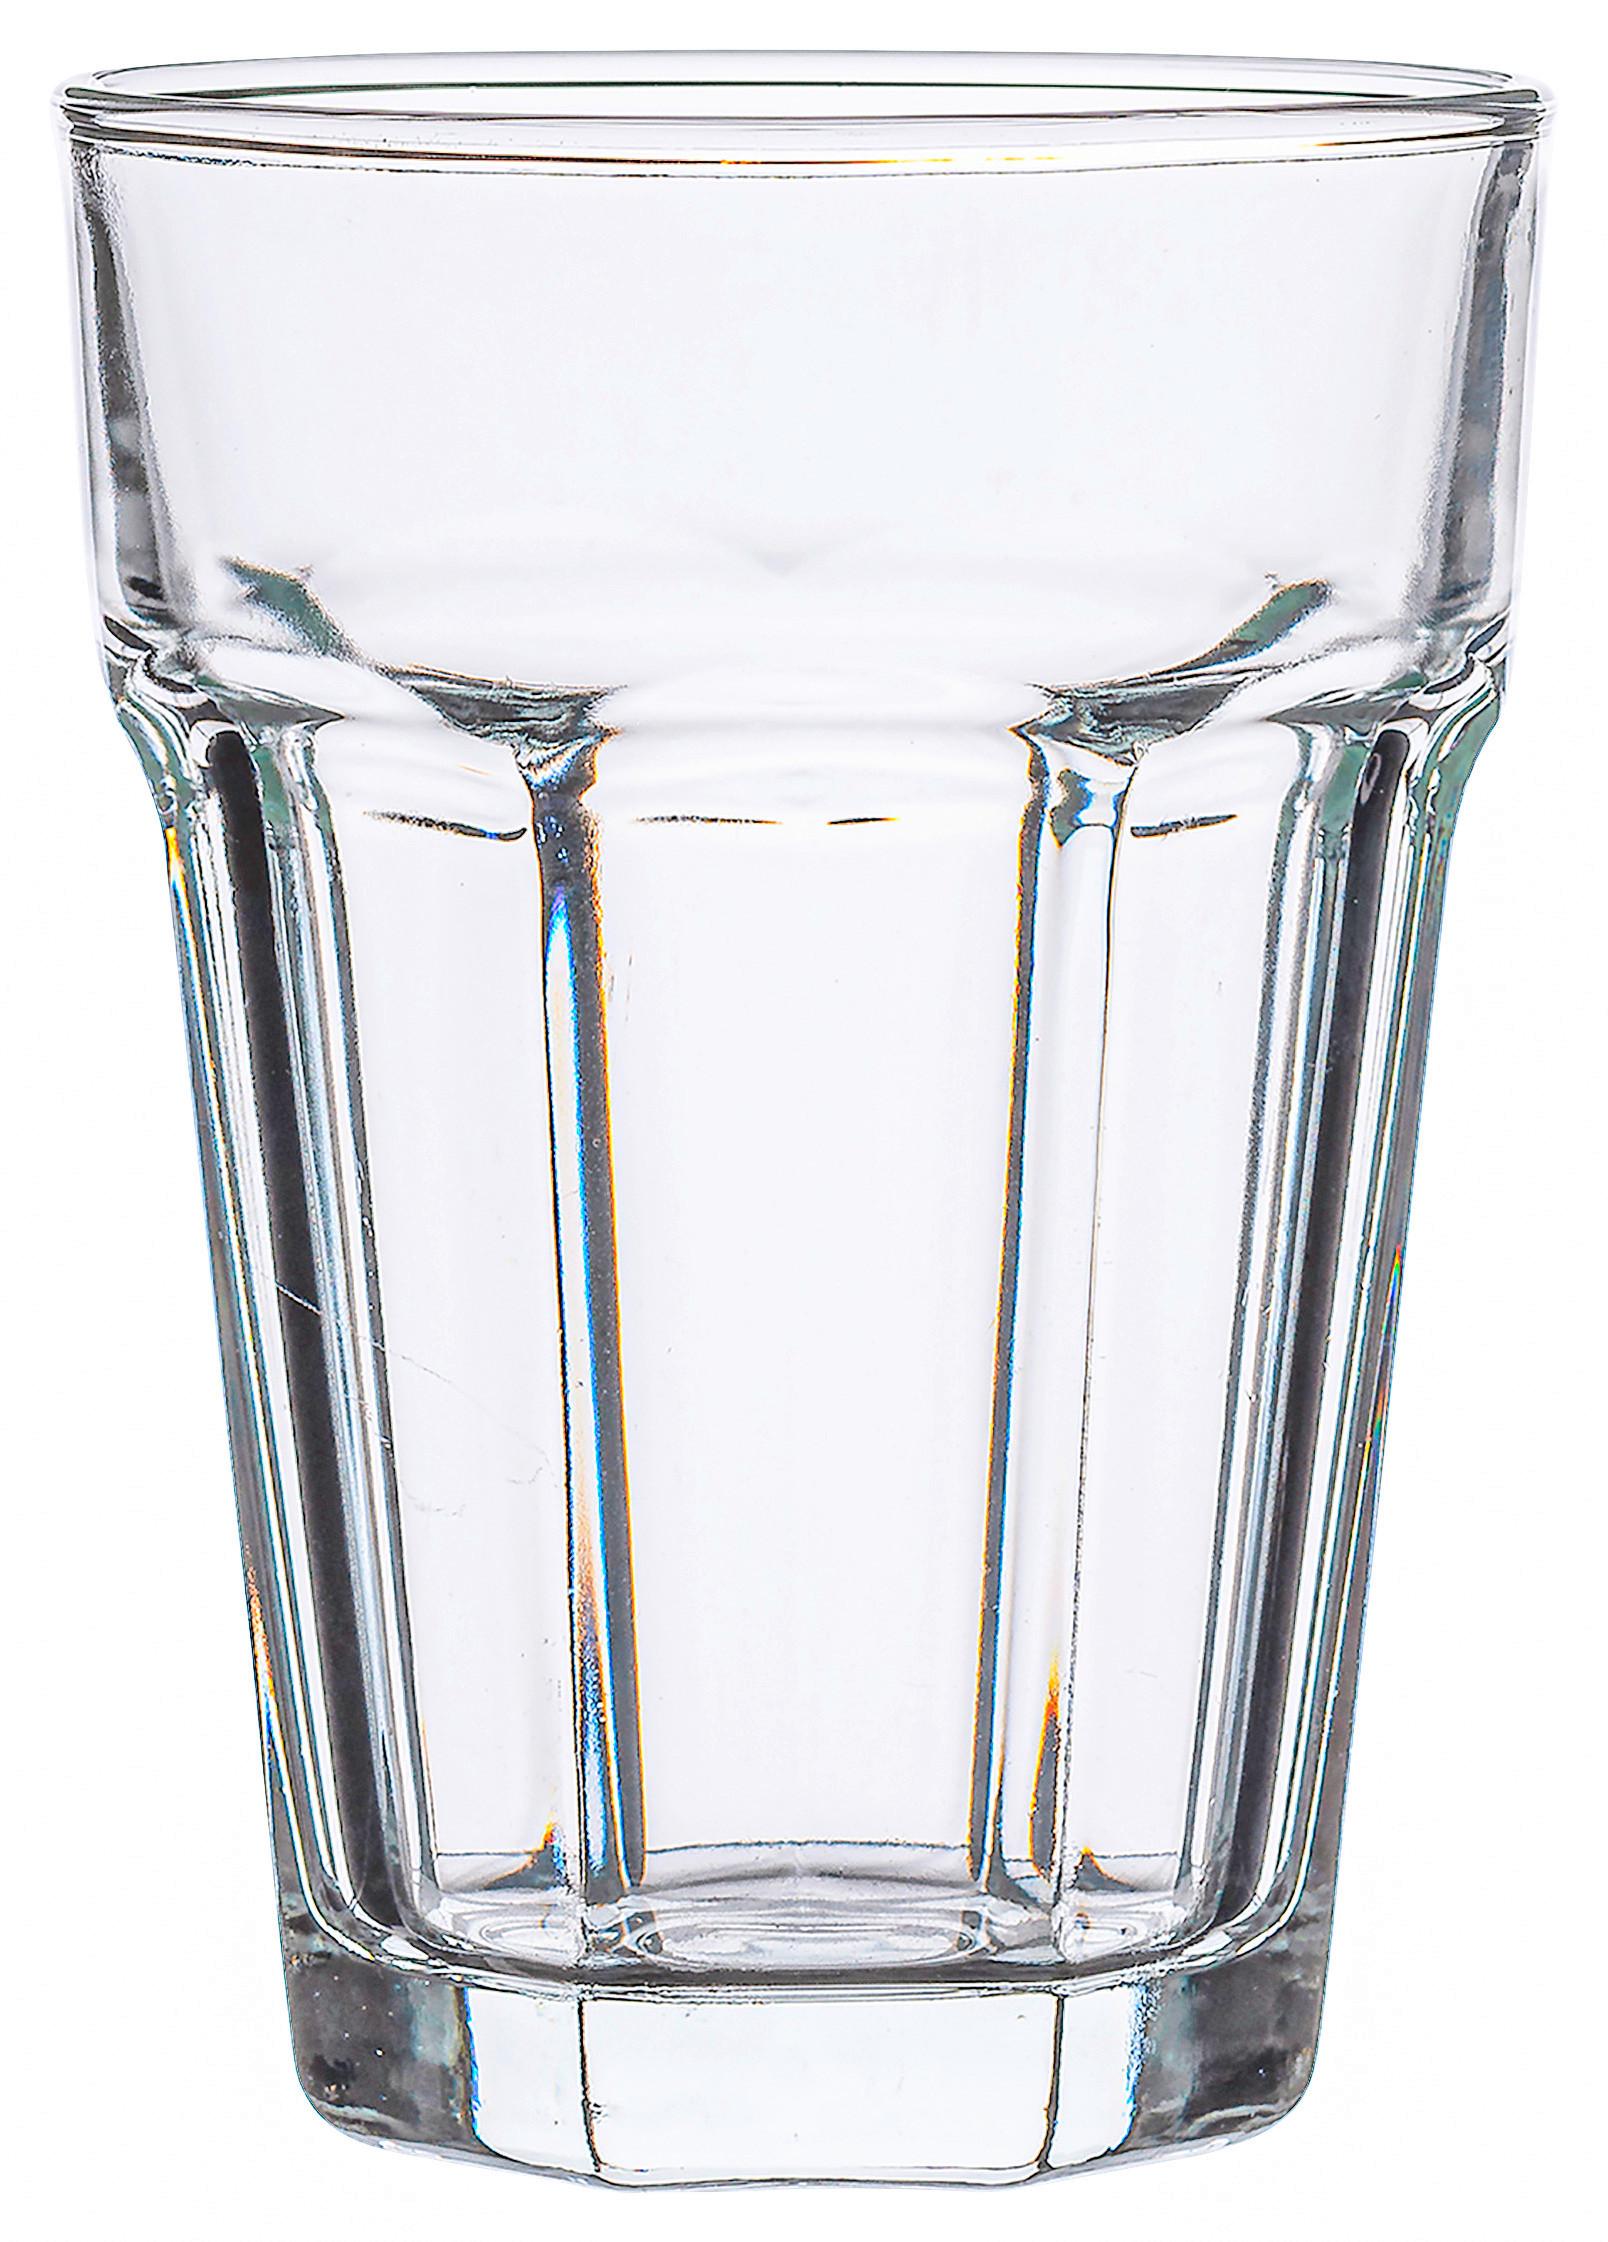 TRINKGLAS EVA -BASED- - Klar, KONVENTIONELL, Glas (9,2/12,8cm) - Based